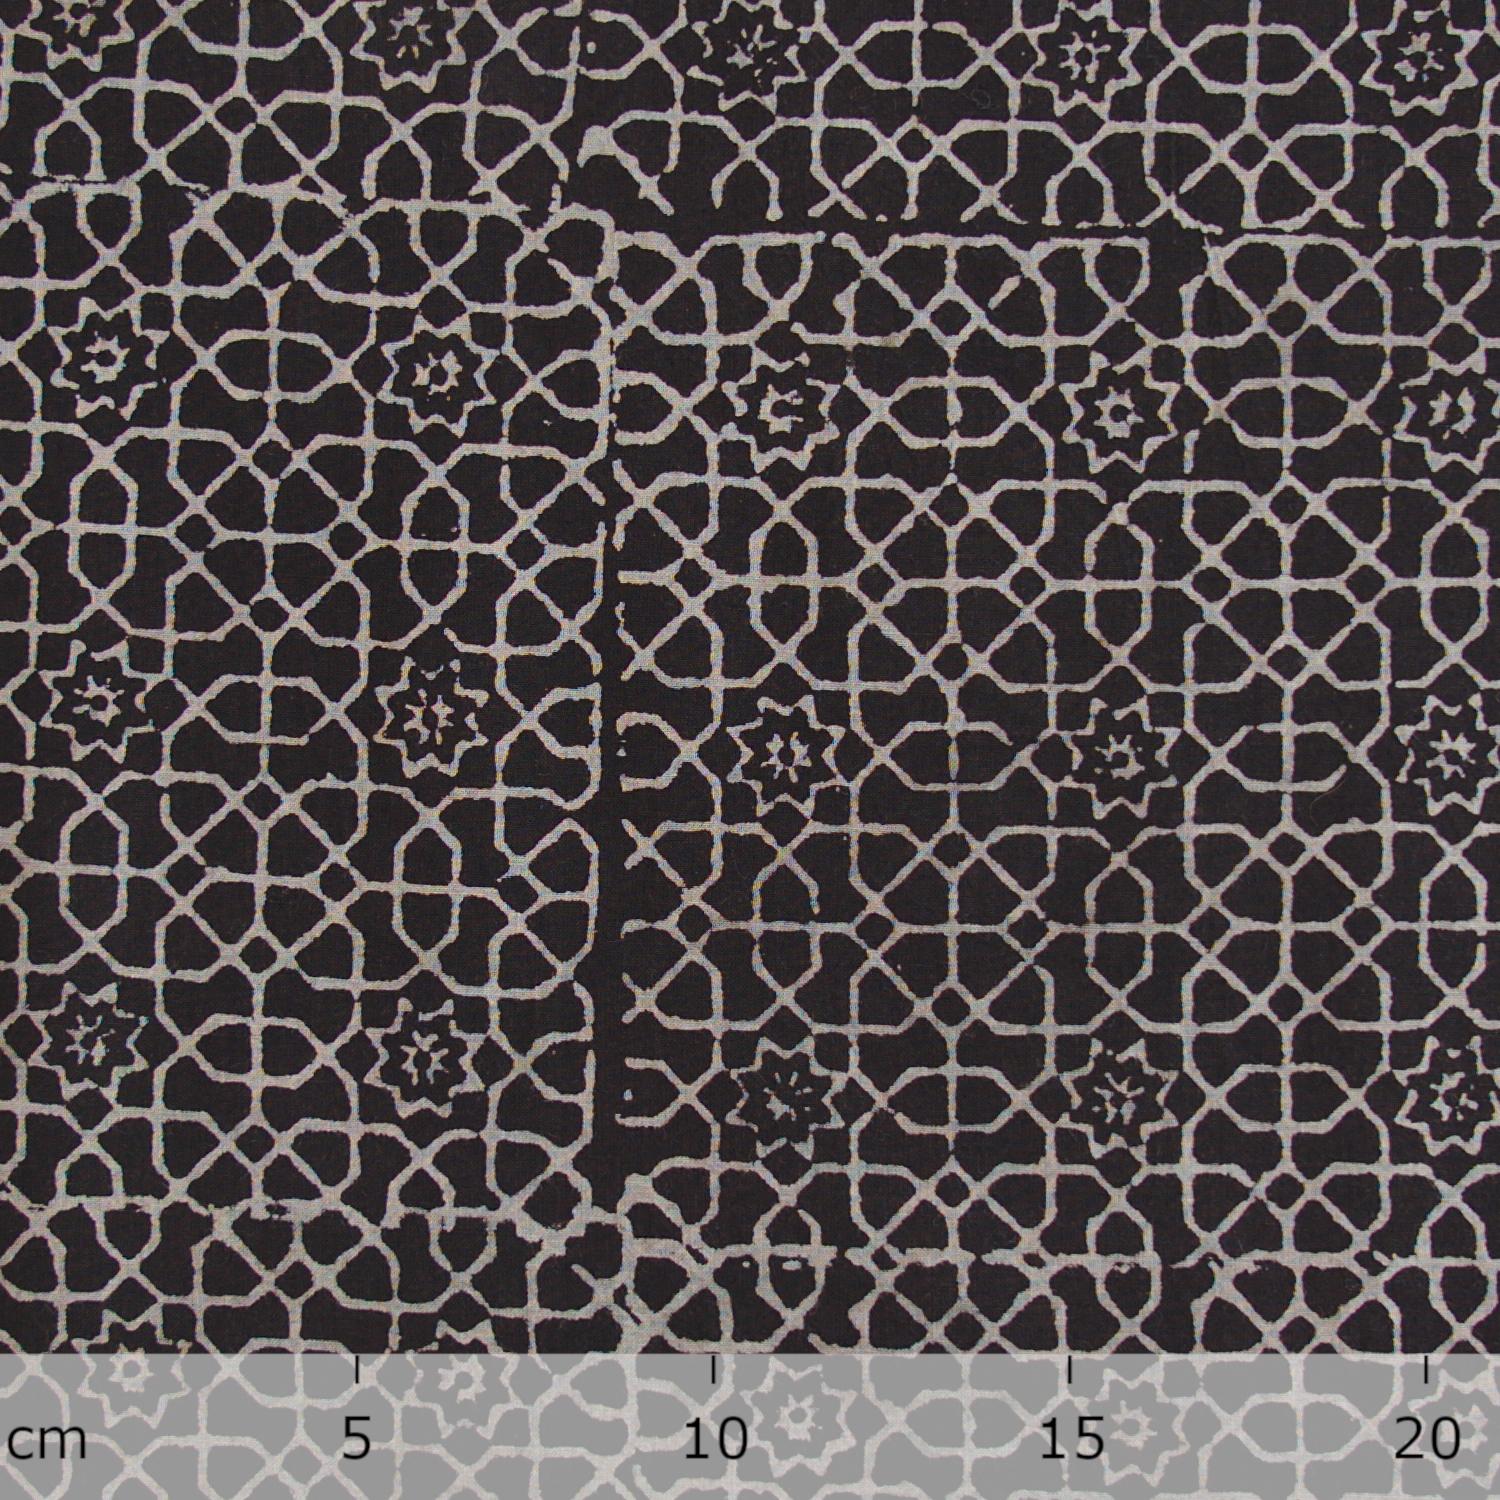 Block Printed Fabric, 100% Cotton, Ajrak Design: Iron Black Base, White Octagon. Ruler